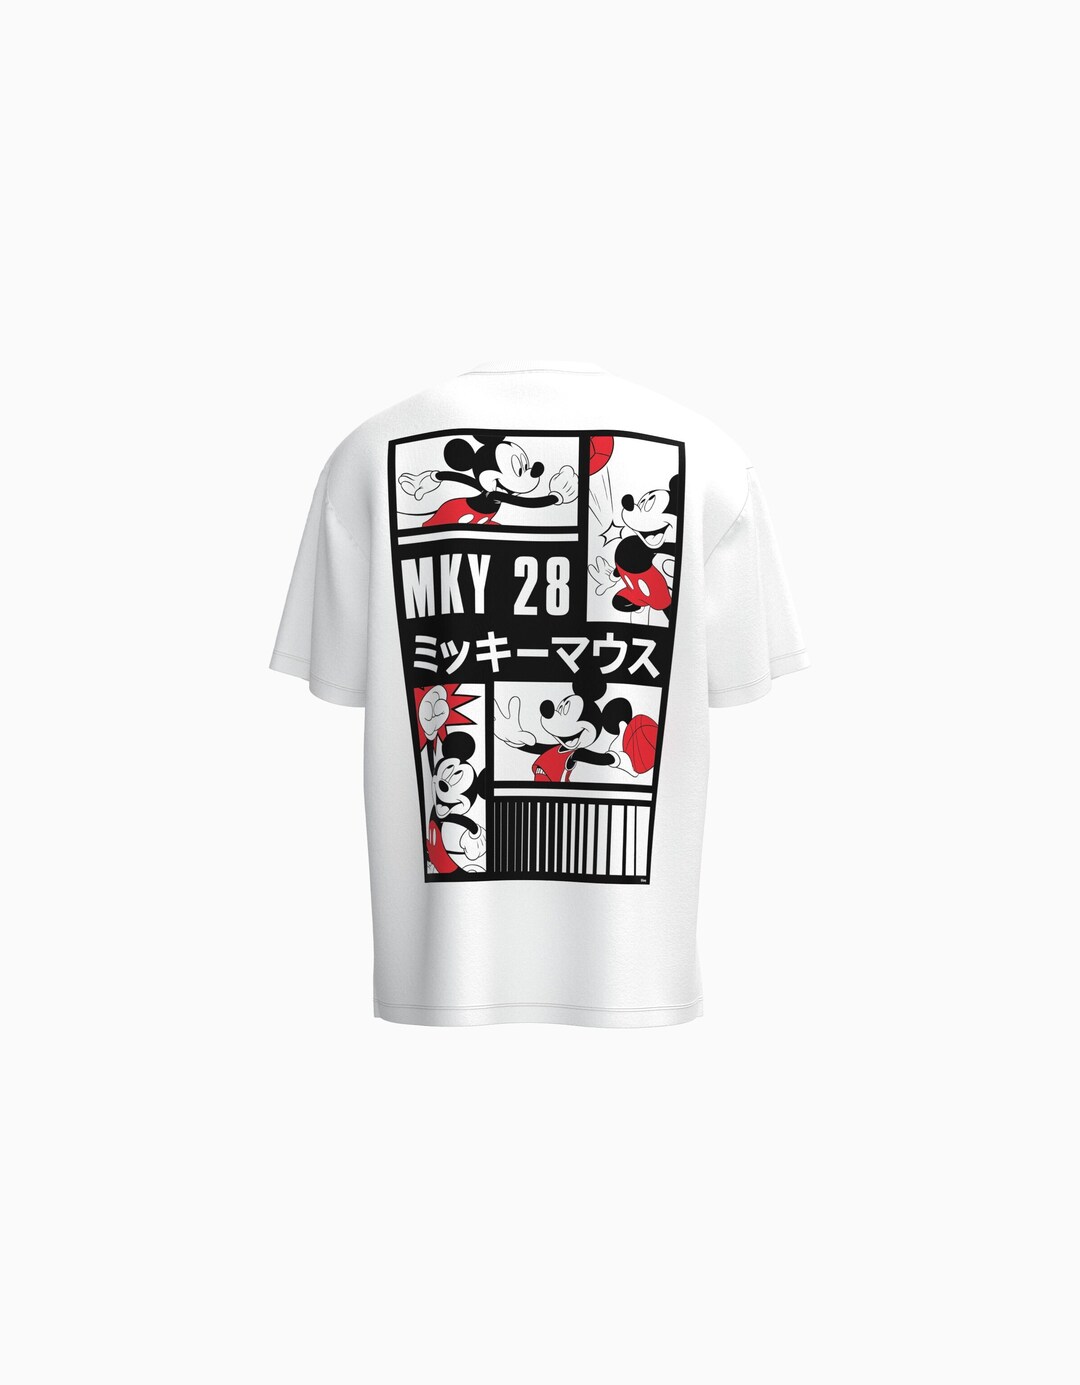 T-shirt Mickey manches courtes boxy fit imprimé